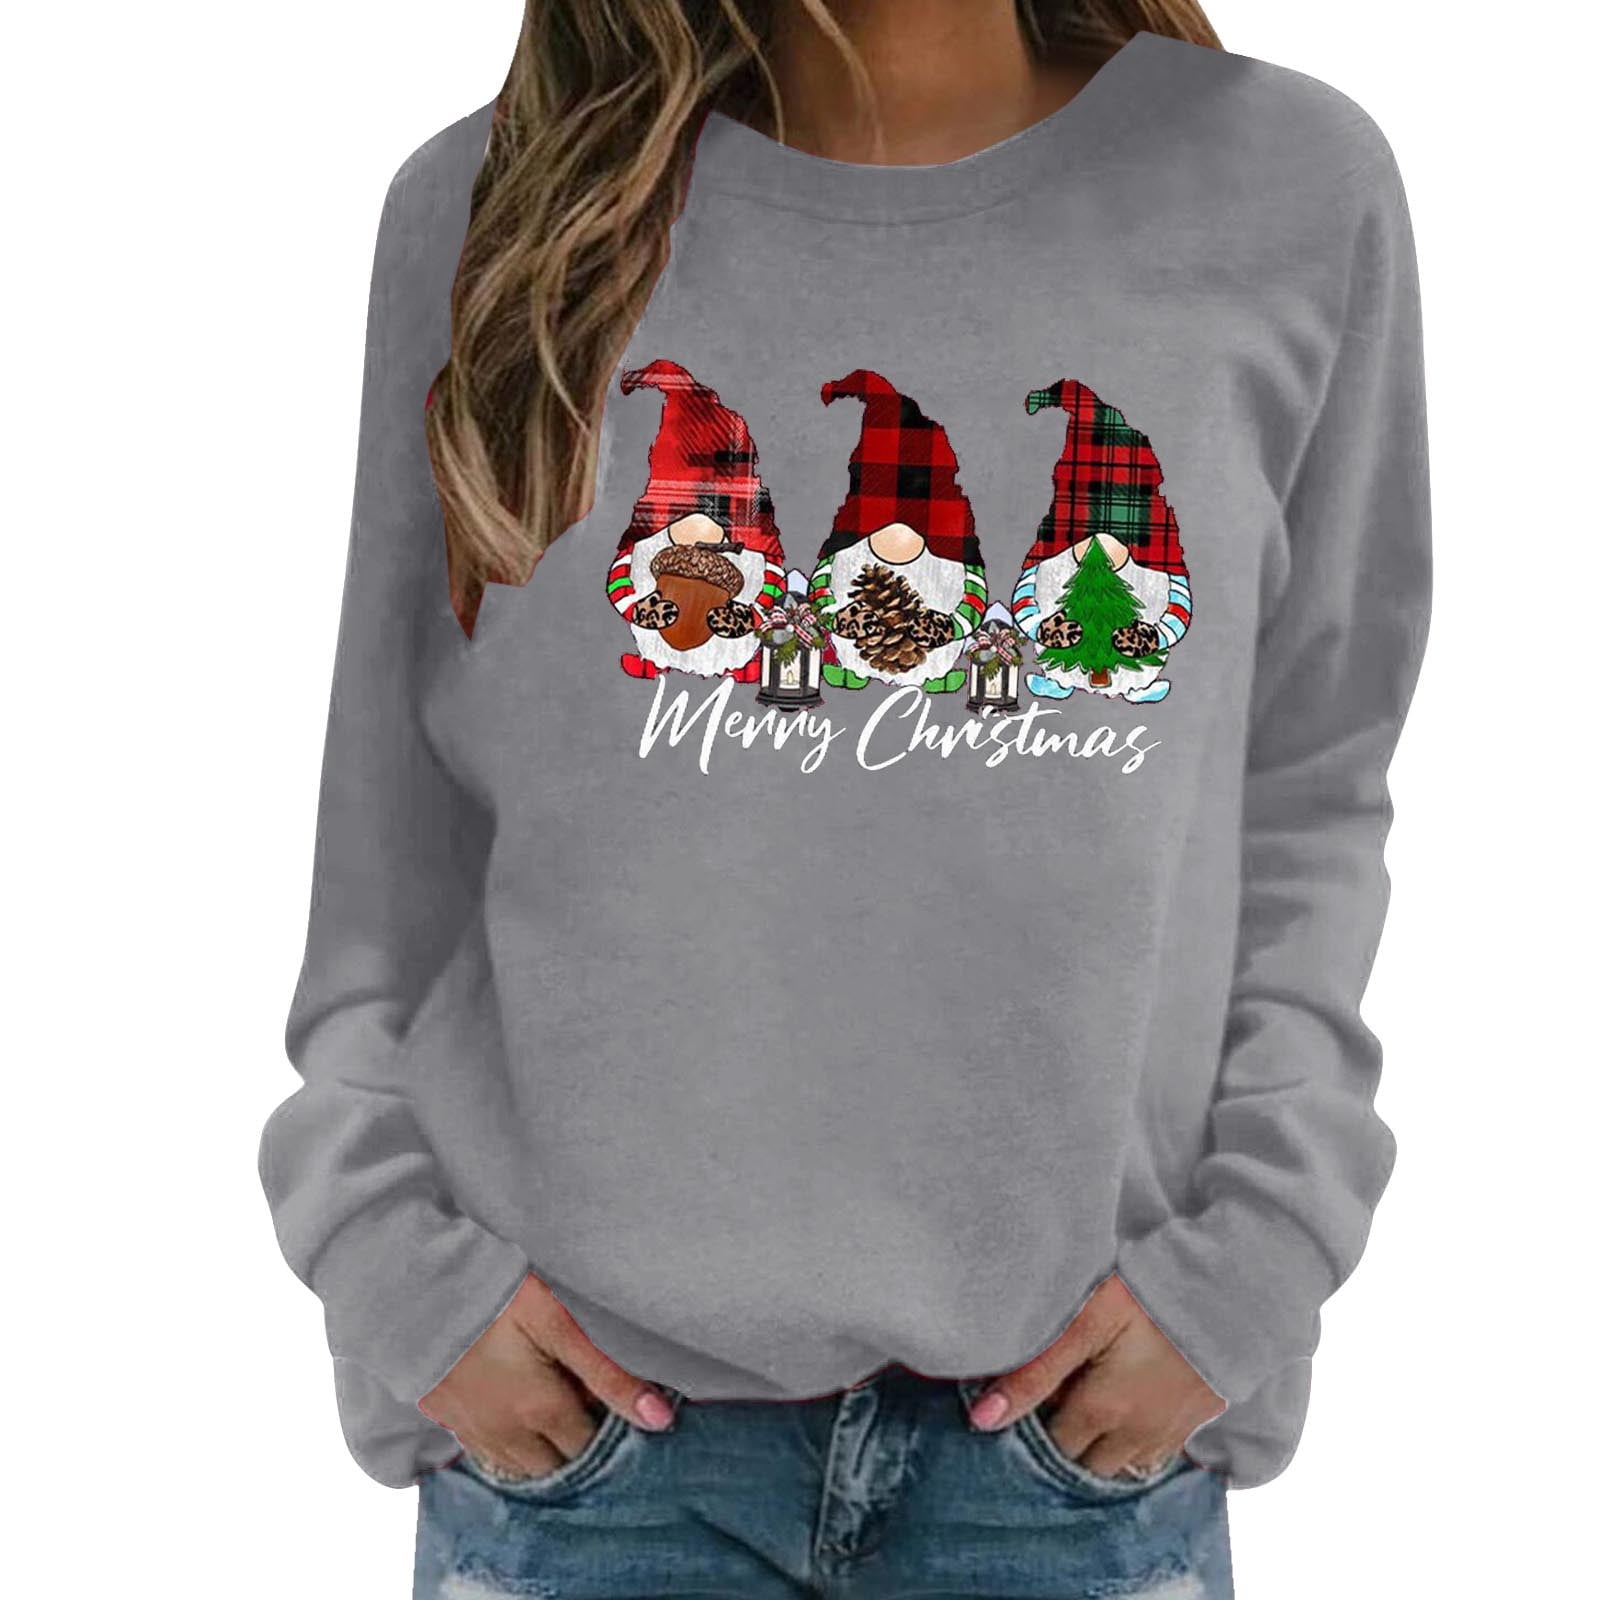 Christmas Shirts for Women Cute Gnomes Santa Print Pullovers Casual ...